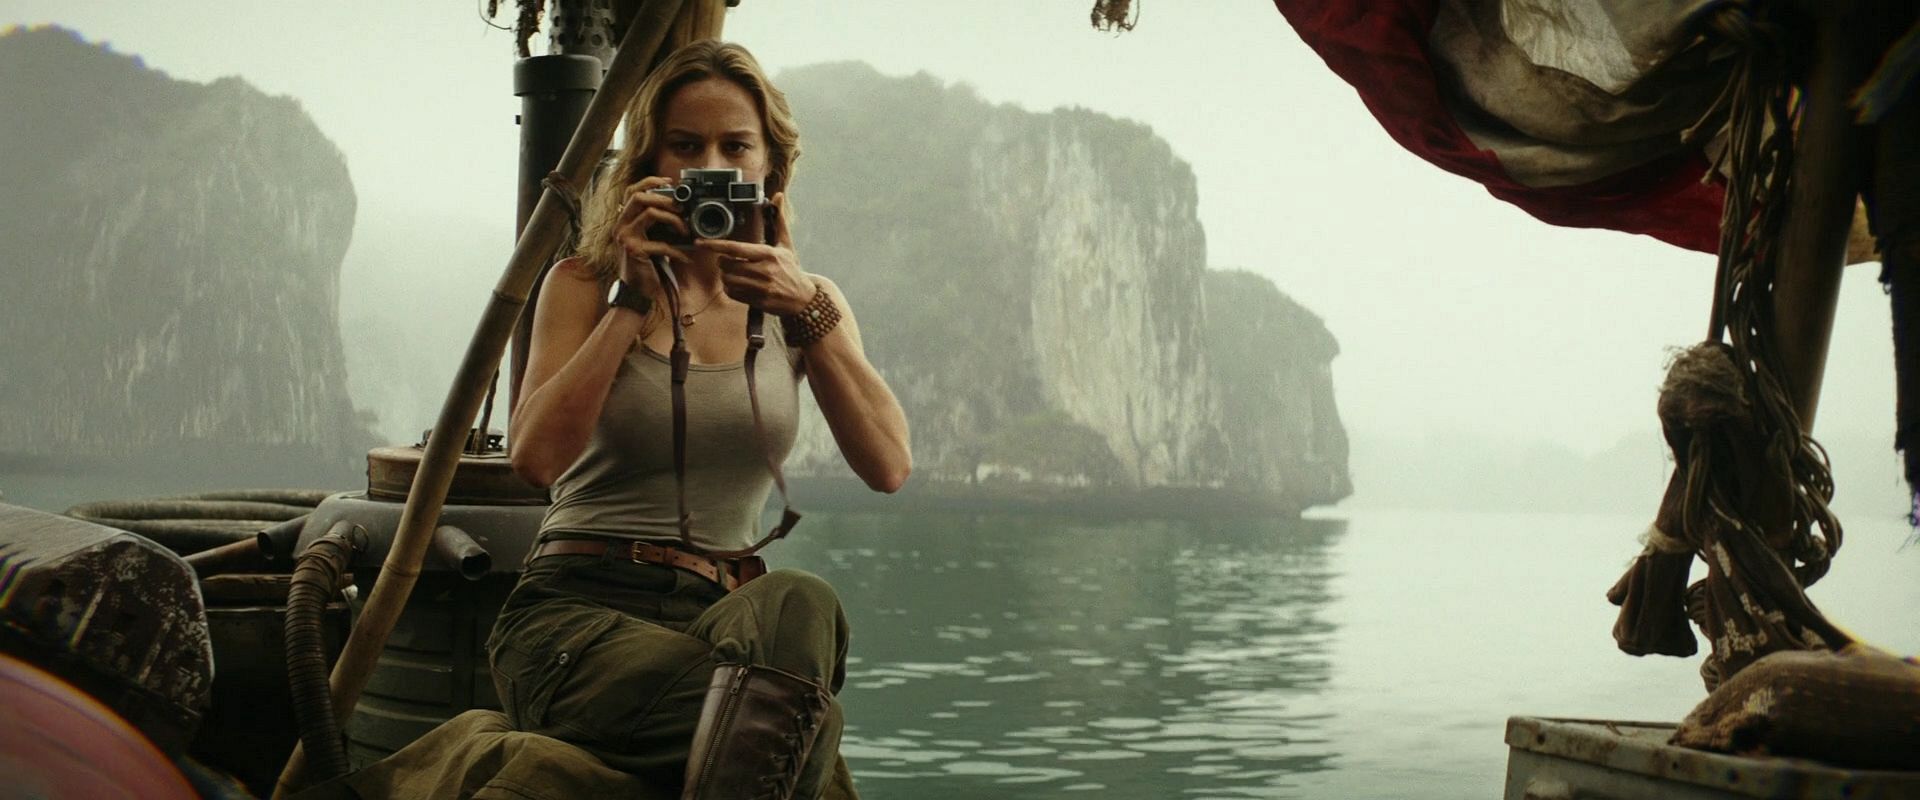 Brie Larson Nue Dans Kong Skull Island